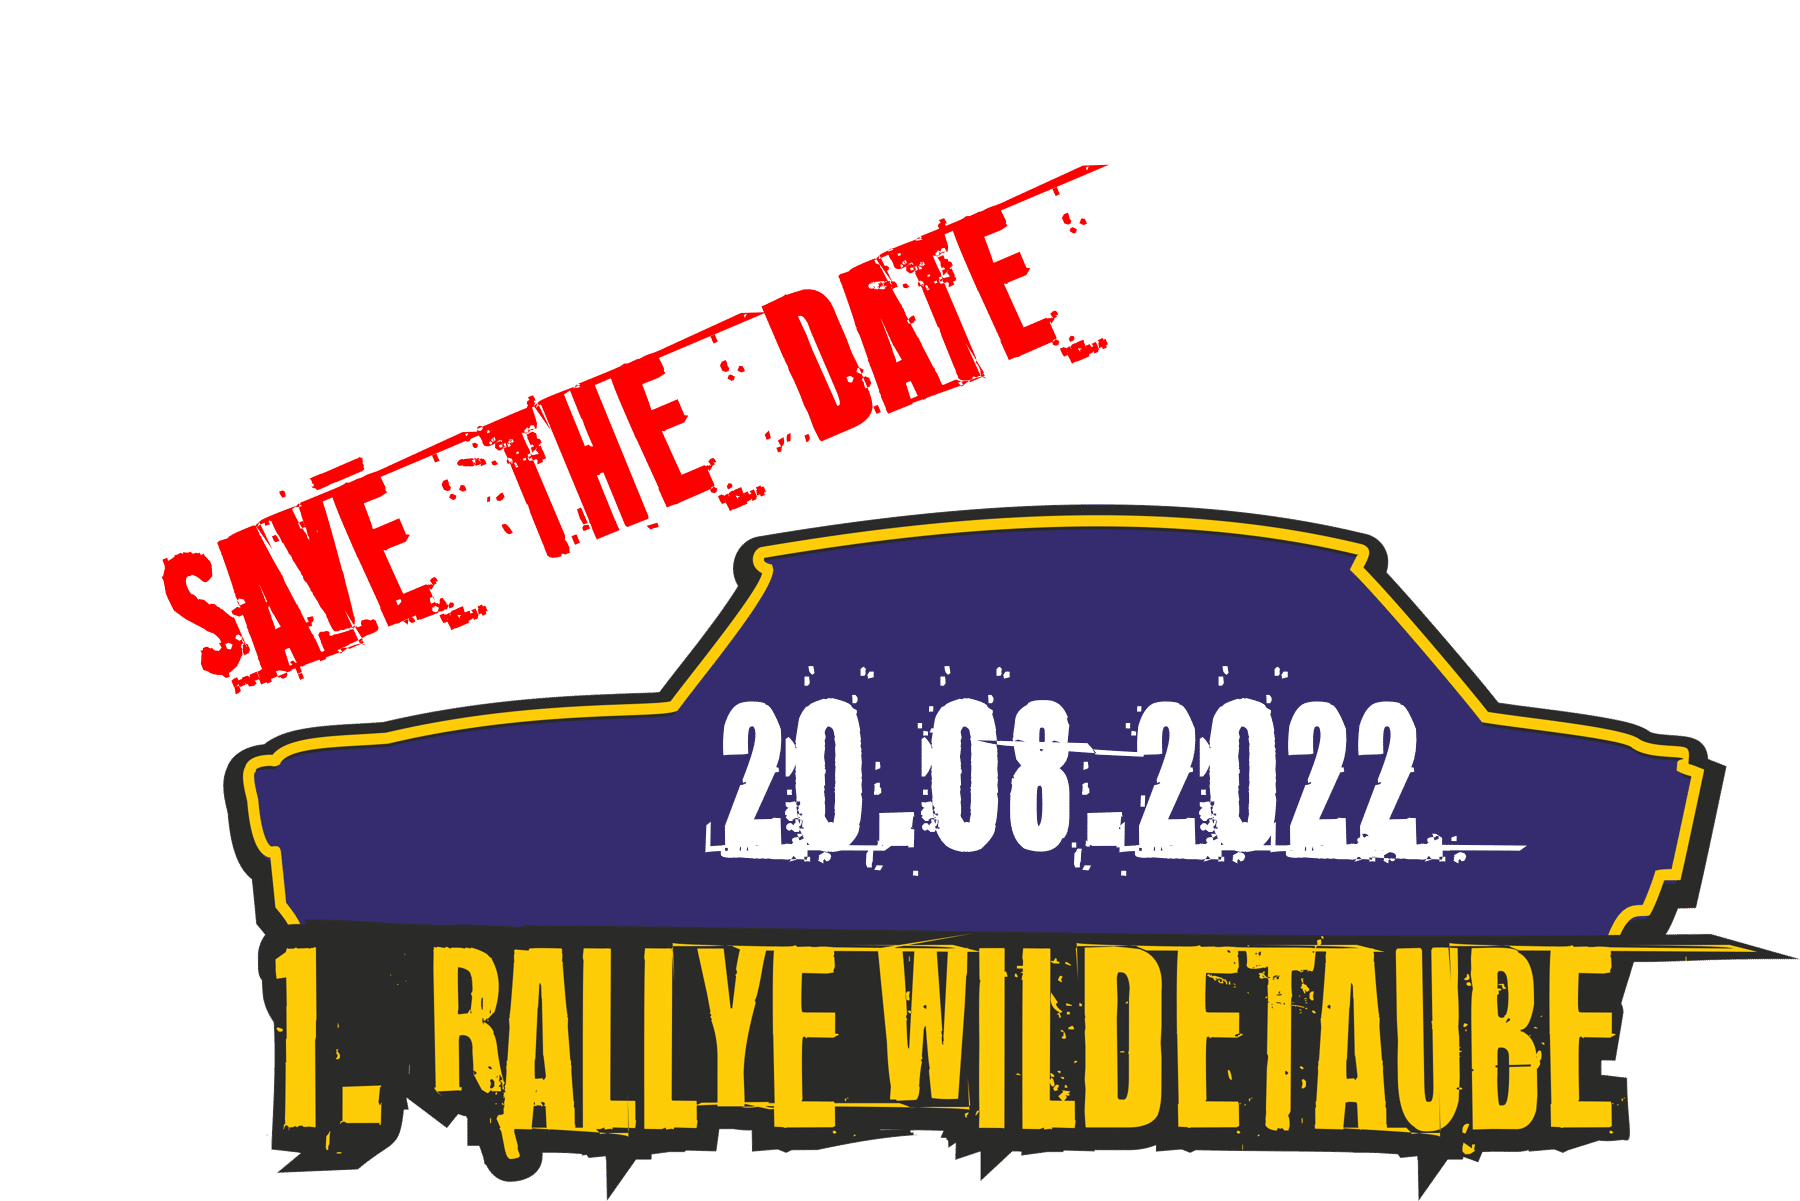 Rallye Wildetaube